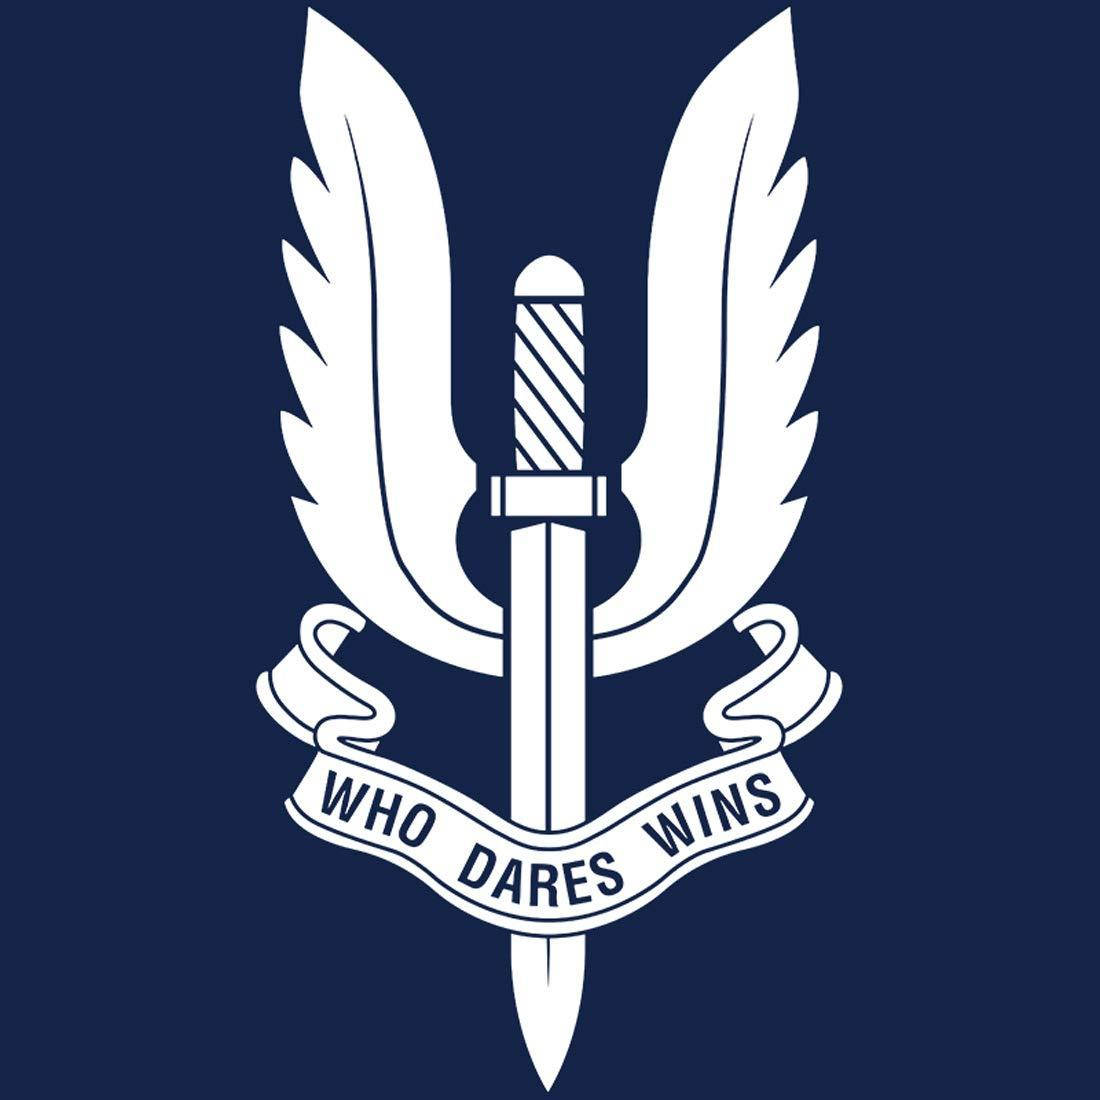 Balidan Badge In Navy Blue